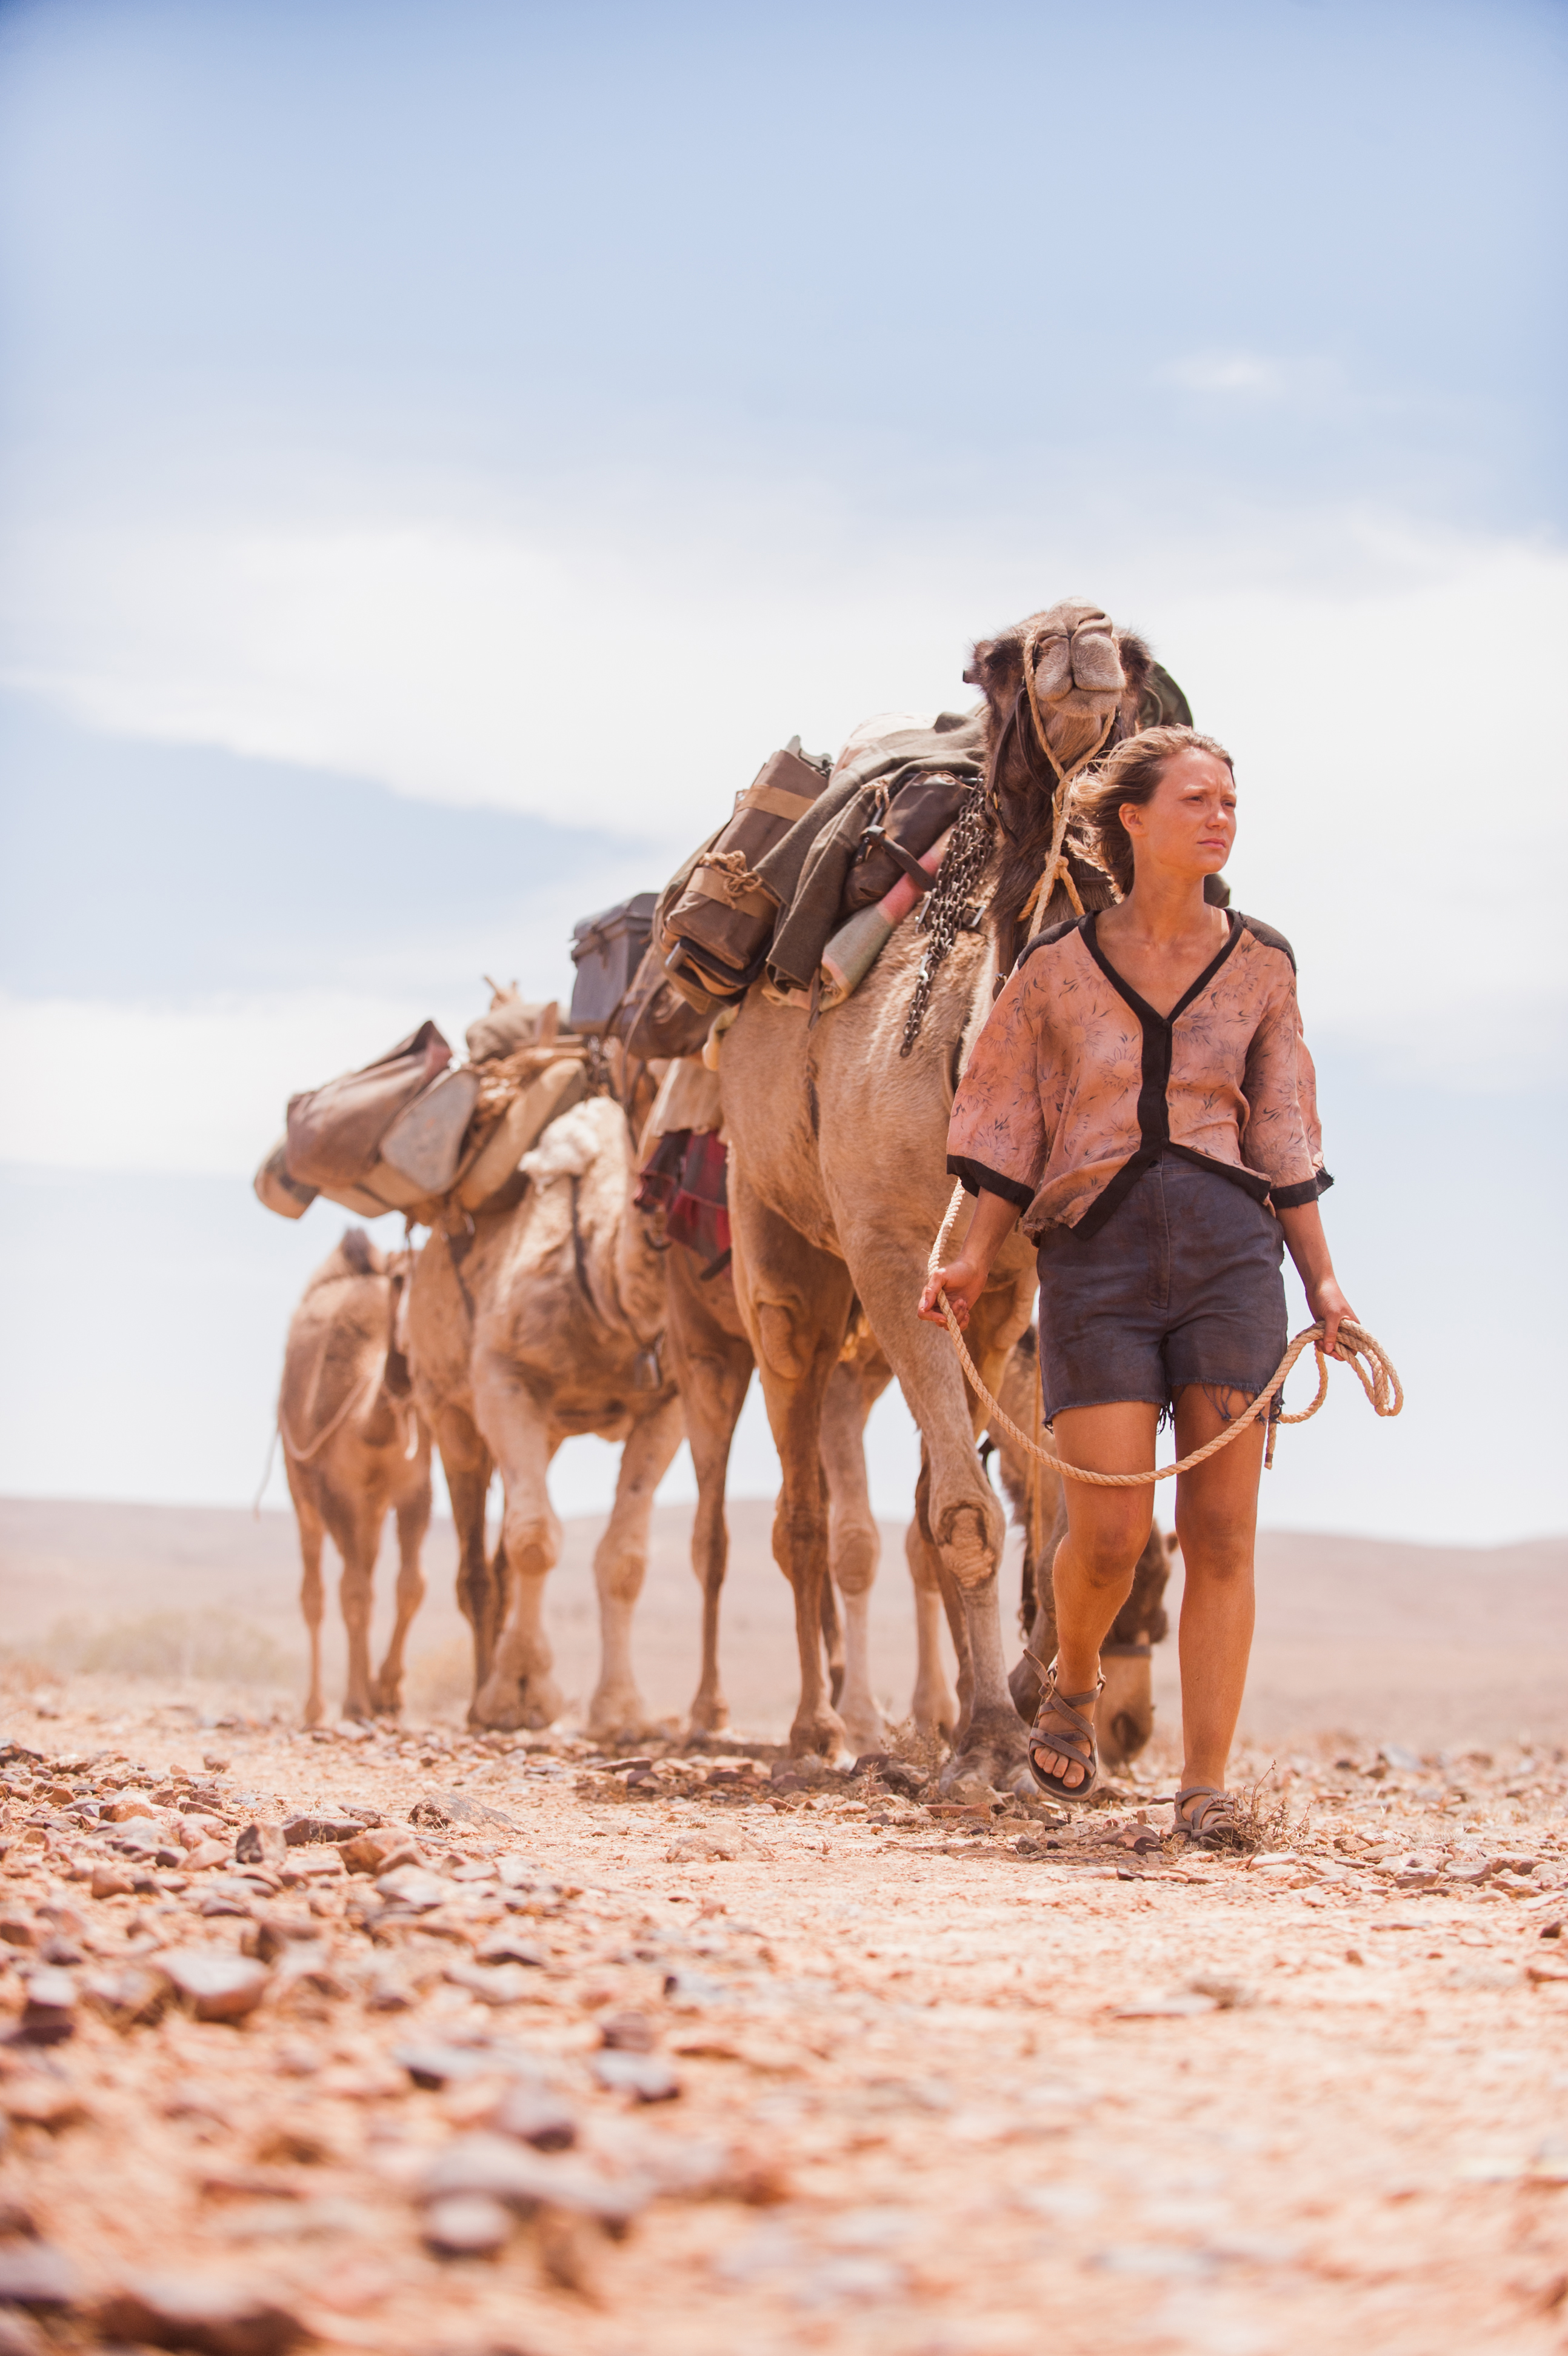 Robyn (Wasikowska) and her camel train.